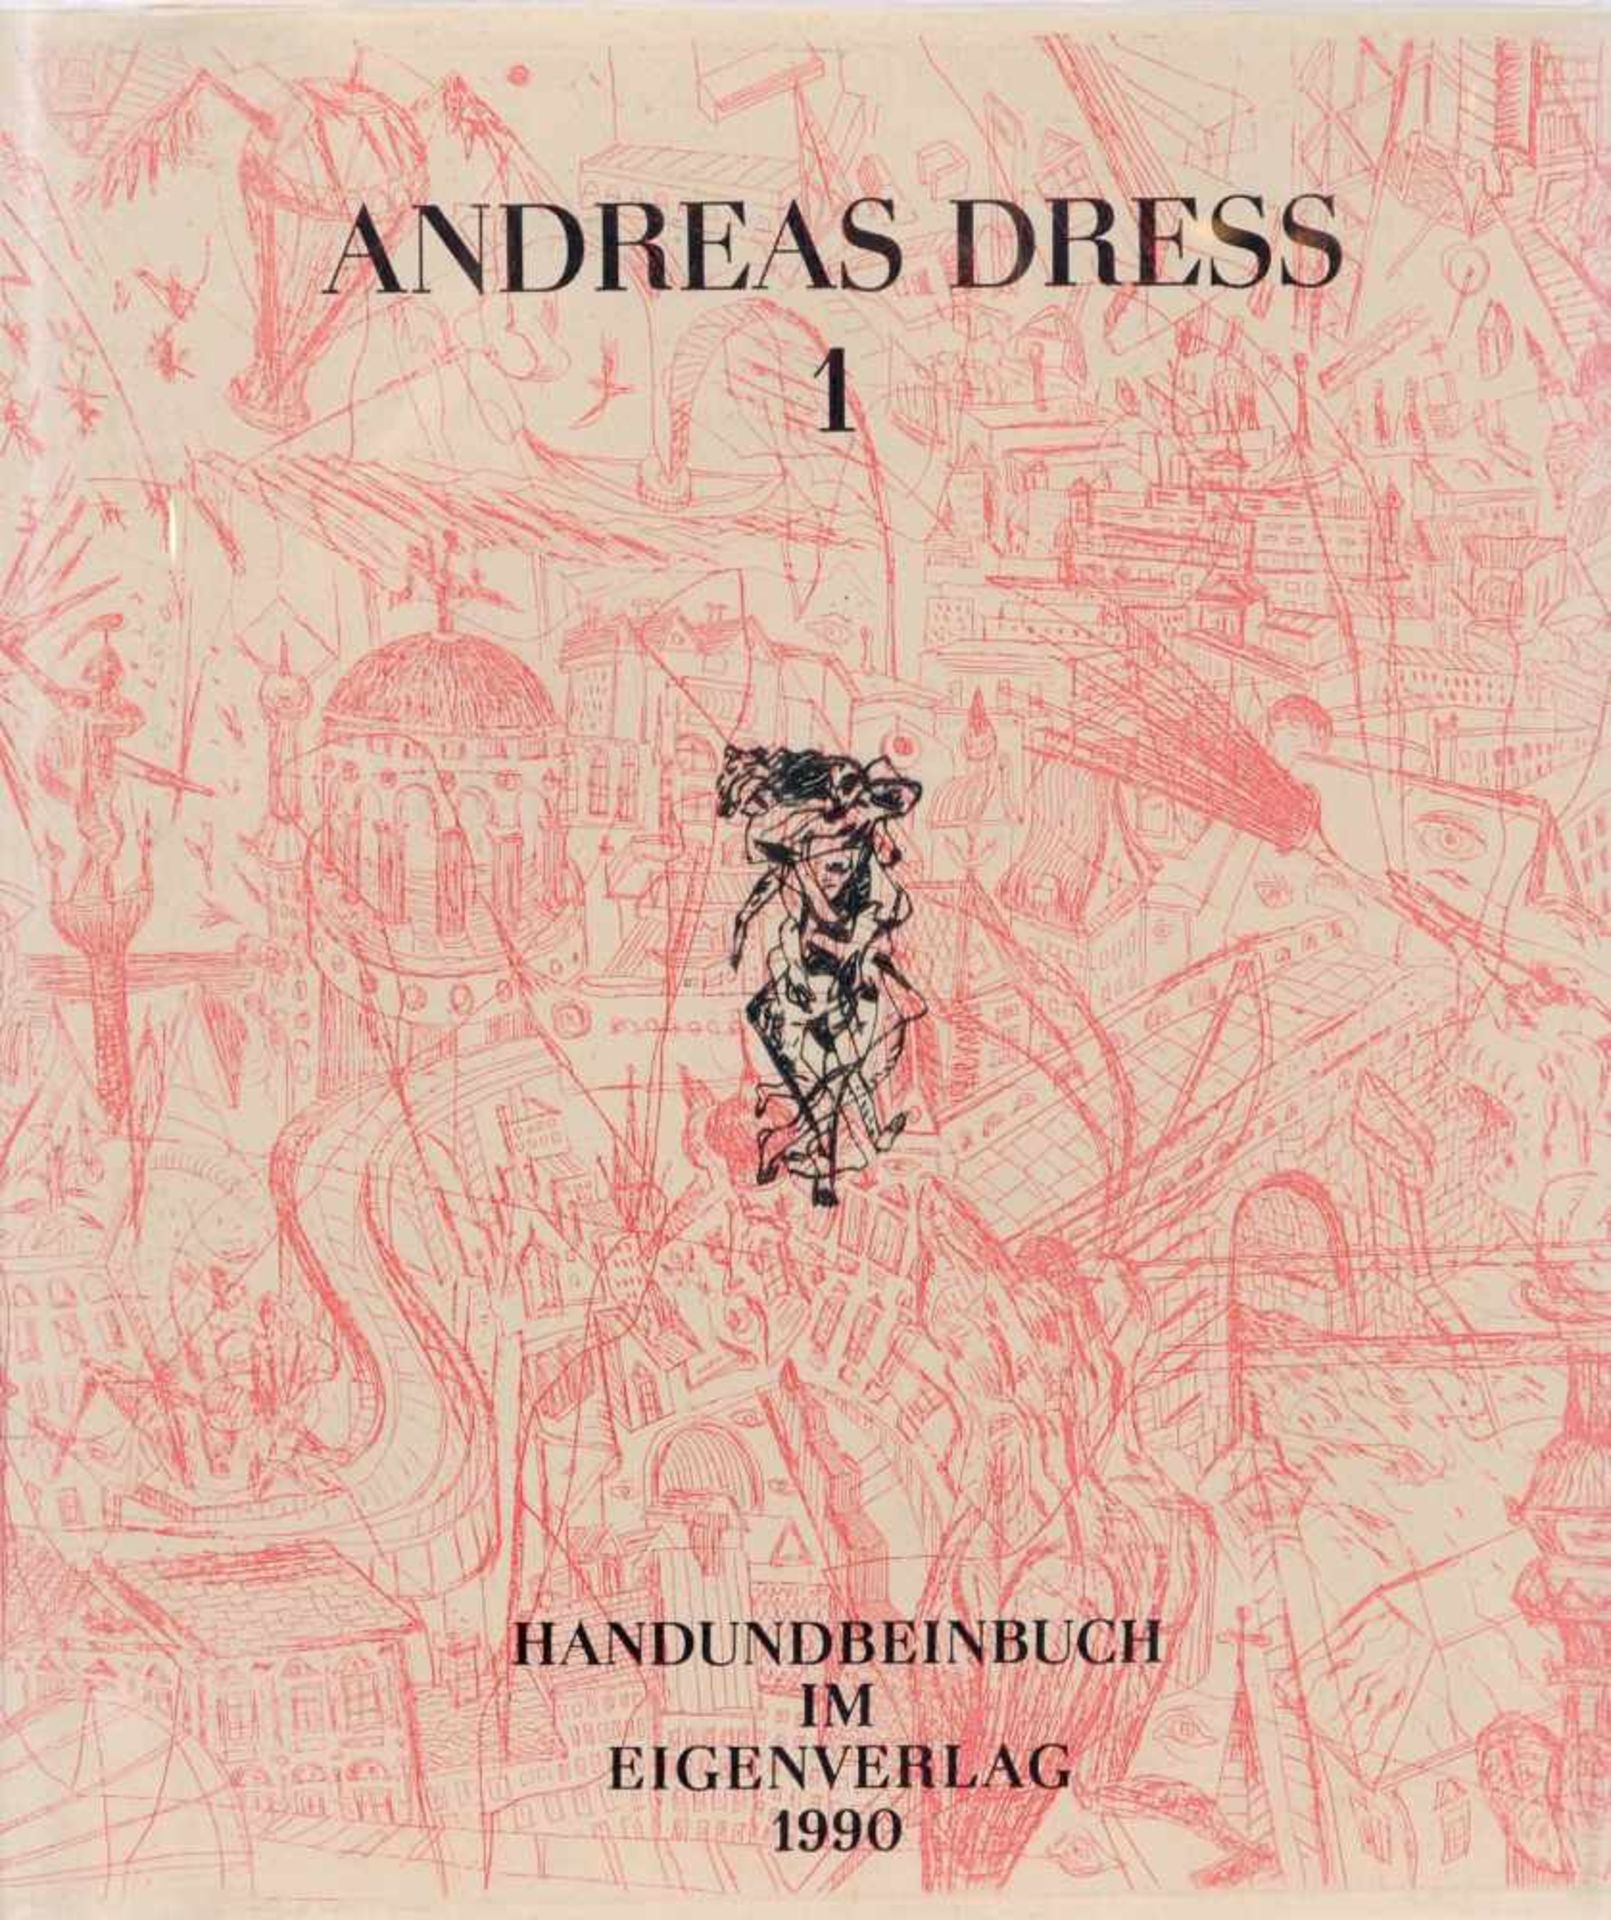 Andreas Dress "Handundbeinbuch". 1990.